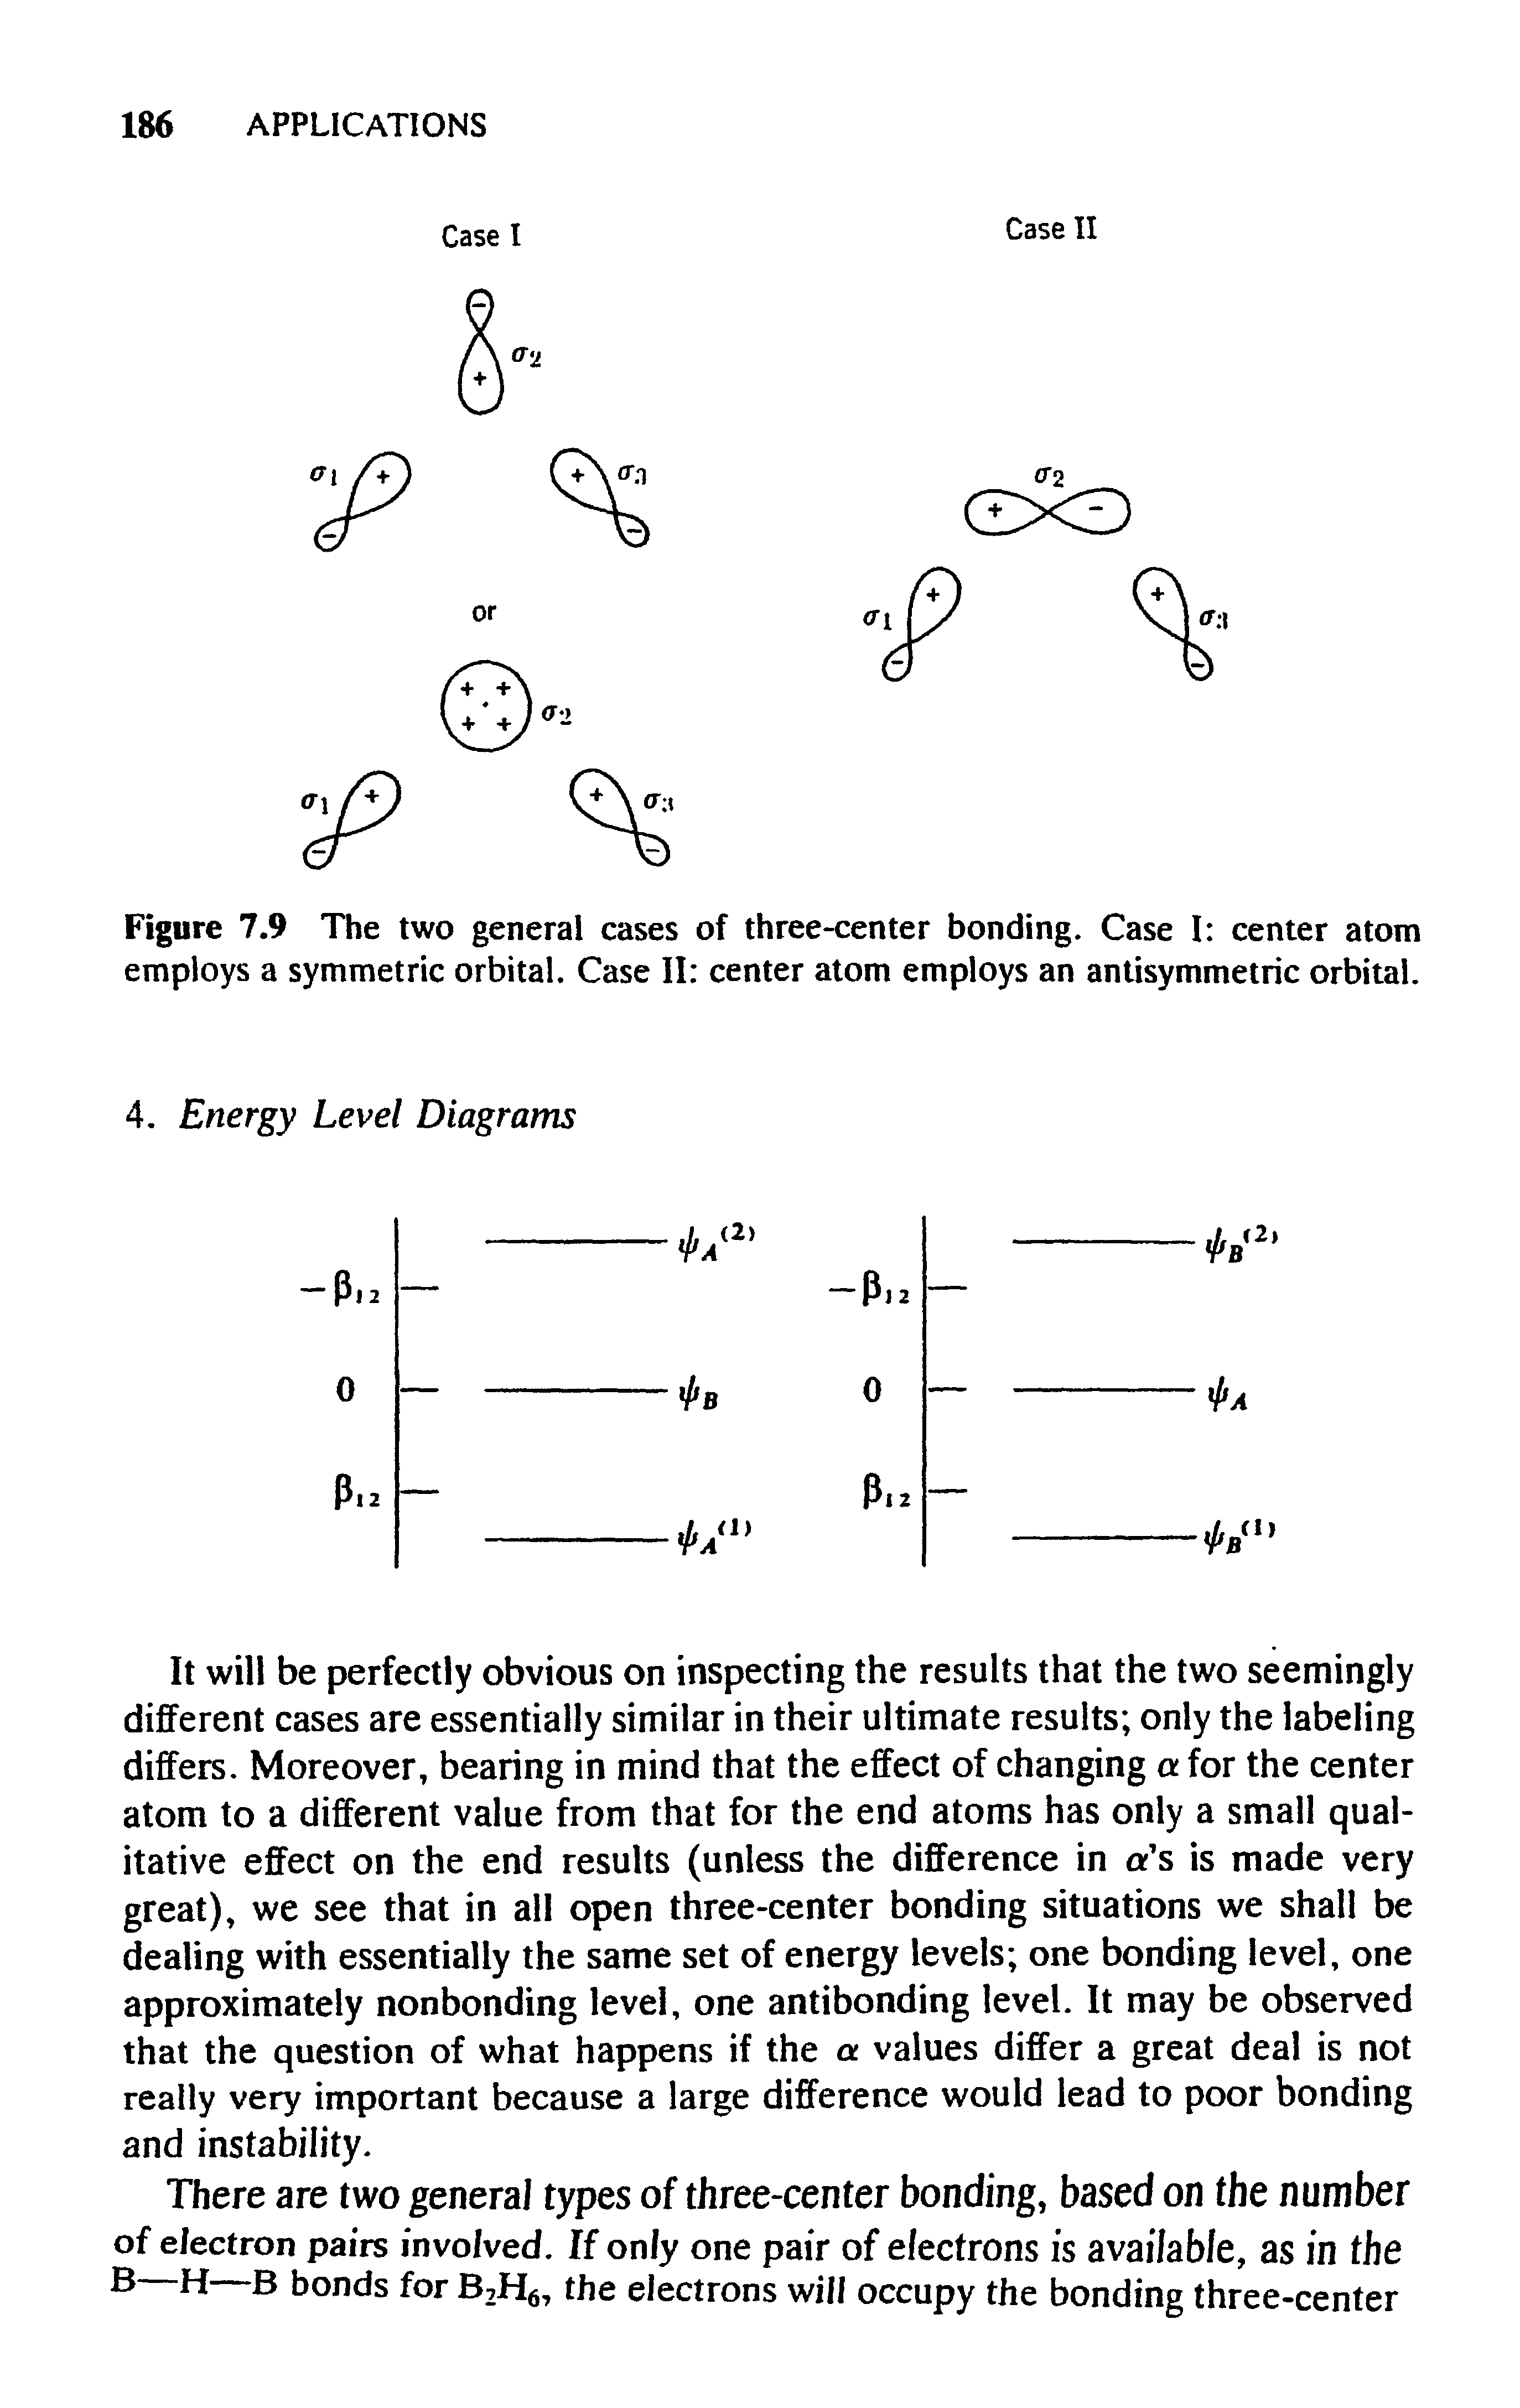 Figure 7.9 The two general cases of three-center bonding. Case I center atom employs a symmetric orbital. Case II center atom employs an antisymmetric orbital.